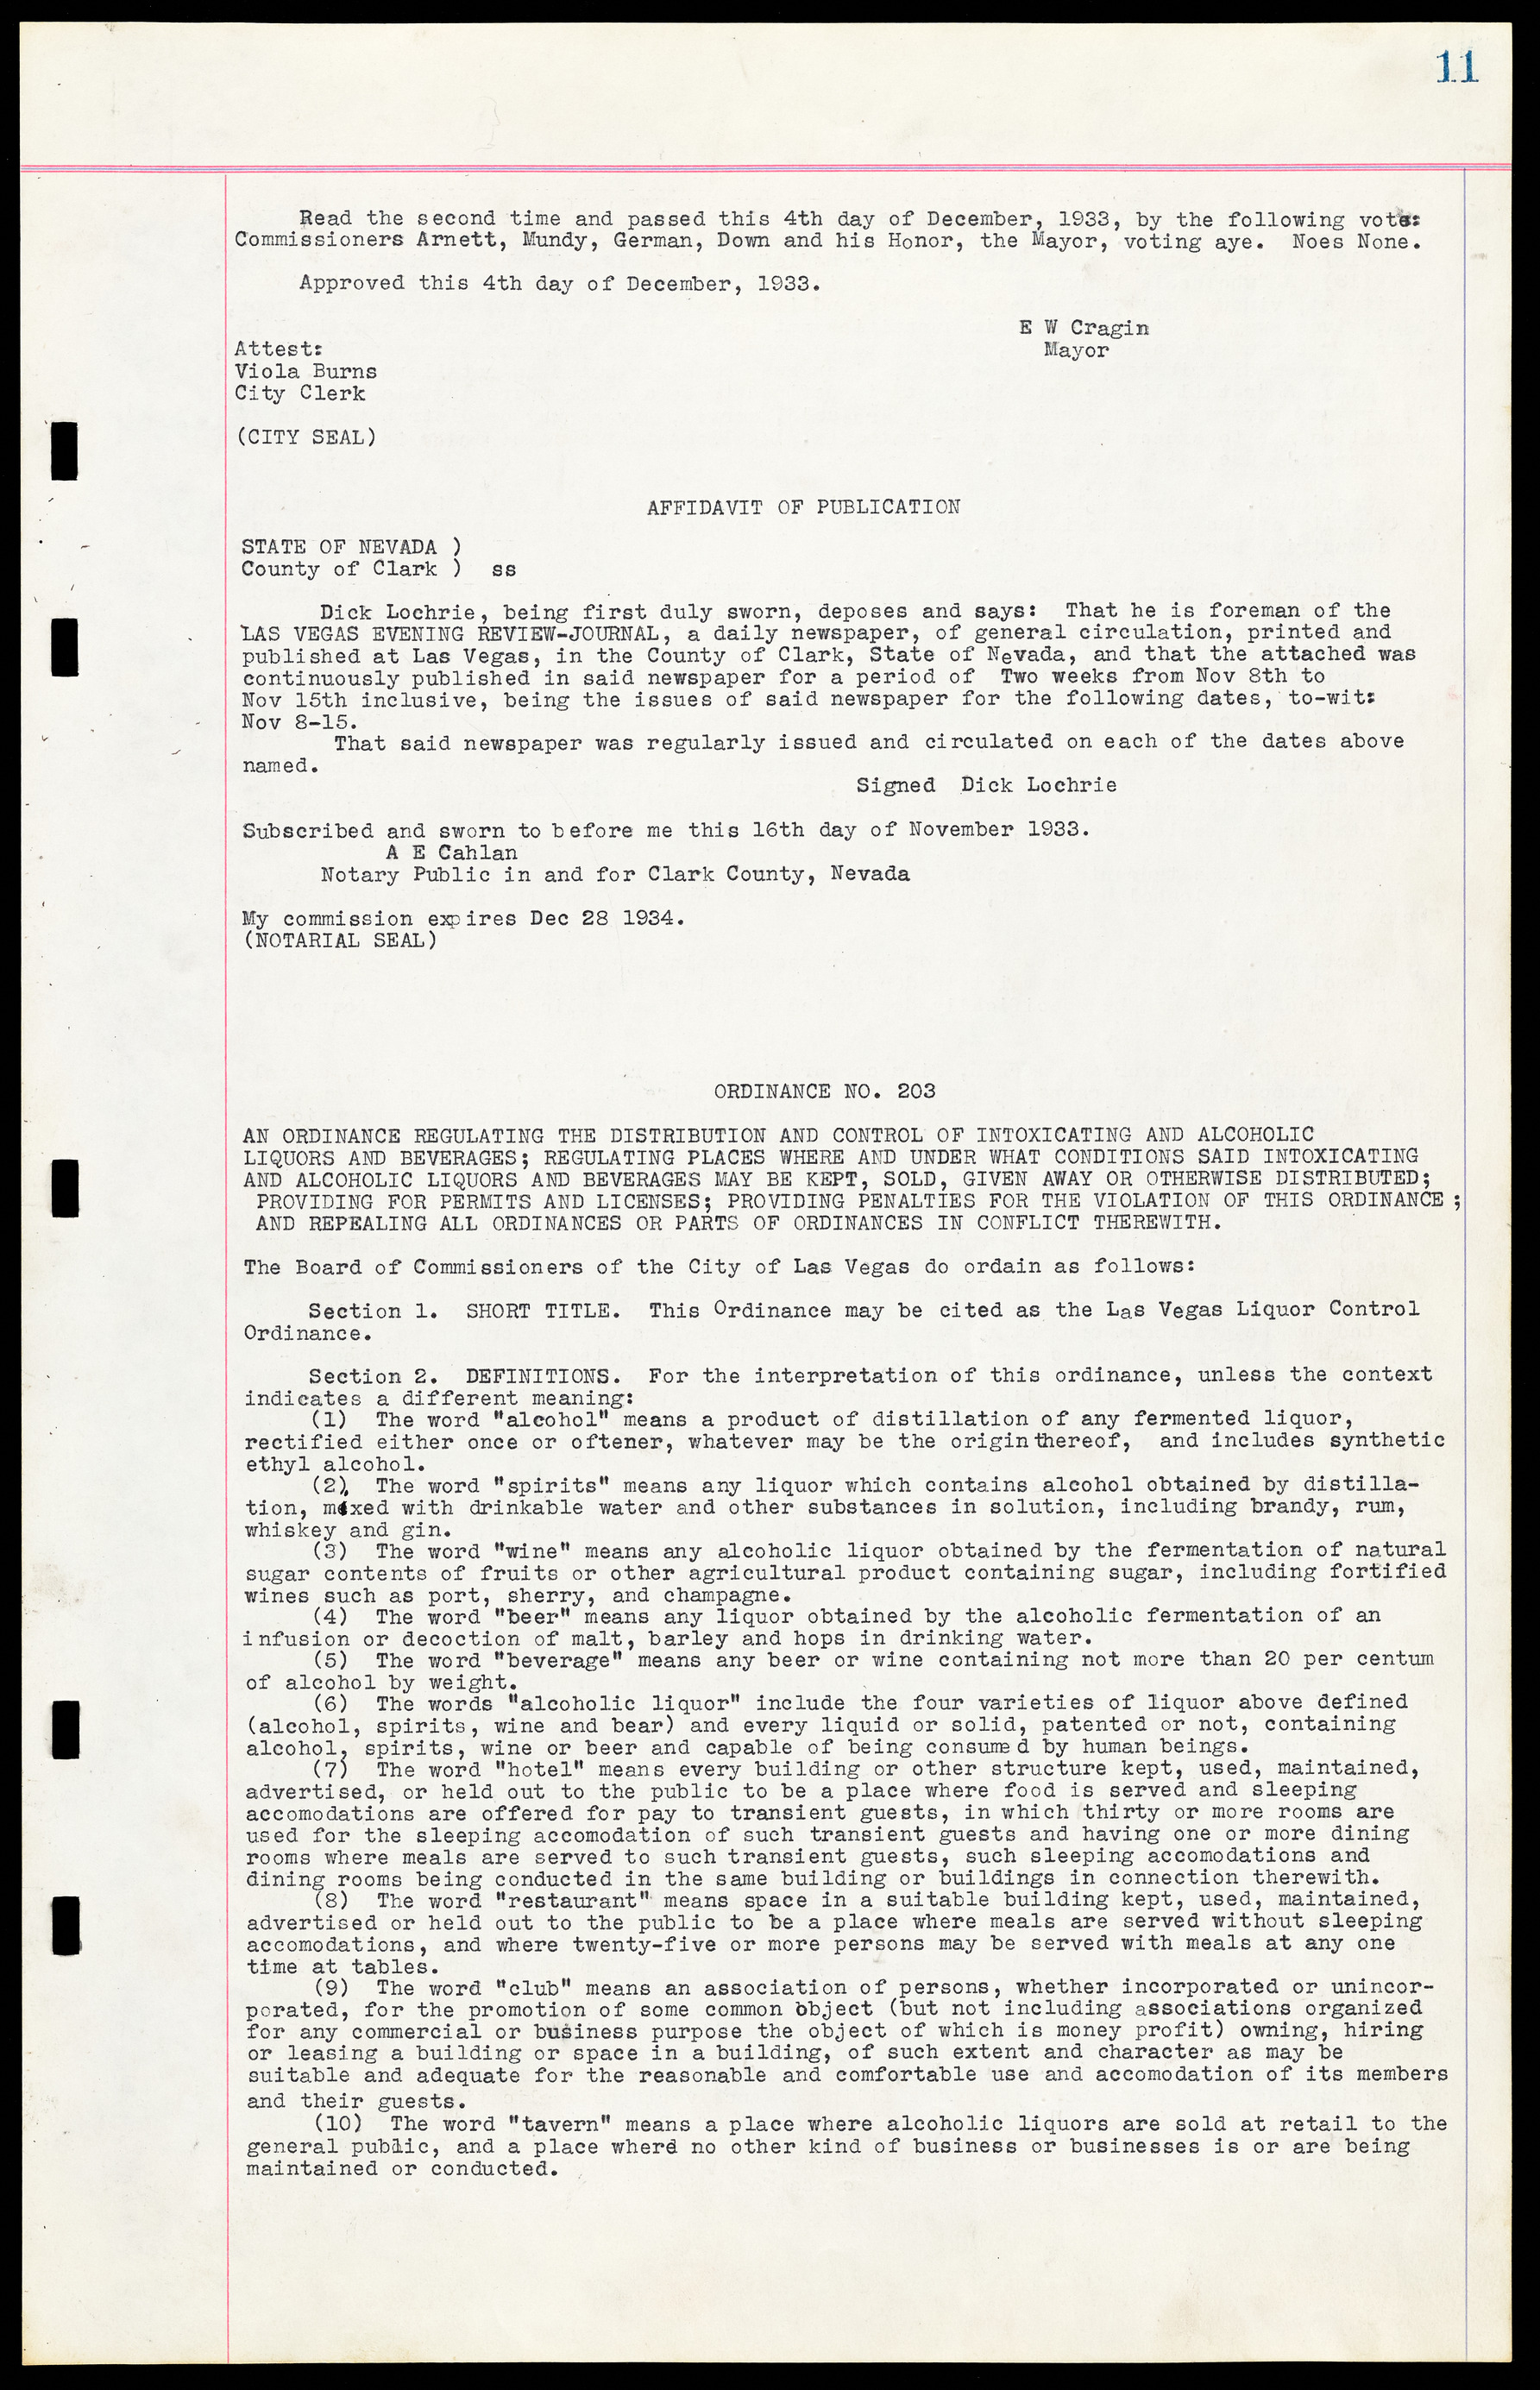 Las Vegas City Ordinances, March 31, 1933 to October 25, 1950, lvc000014-29